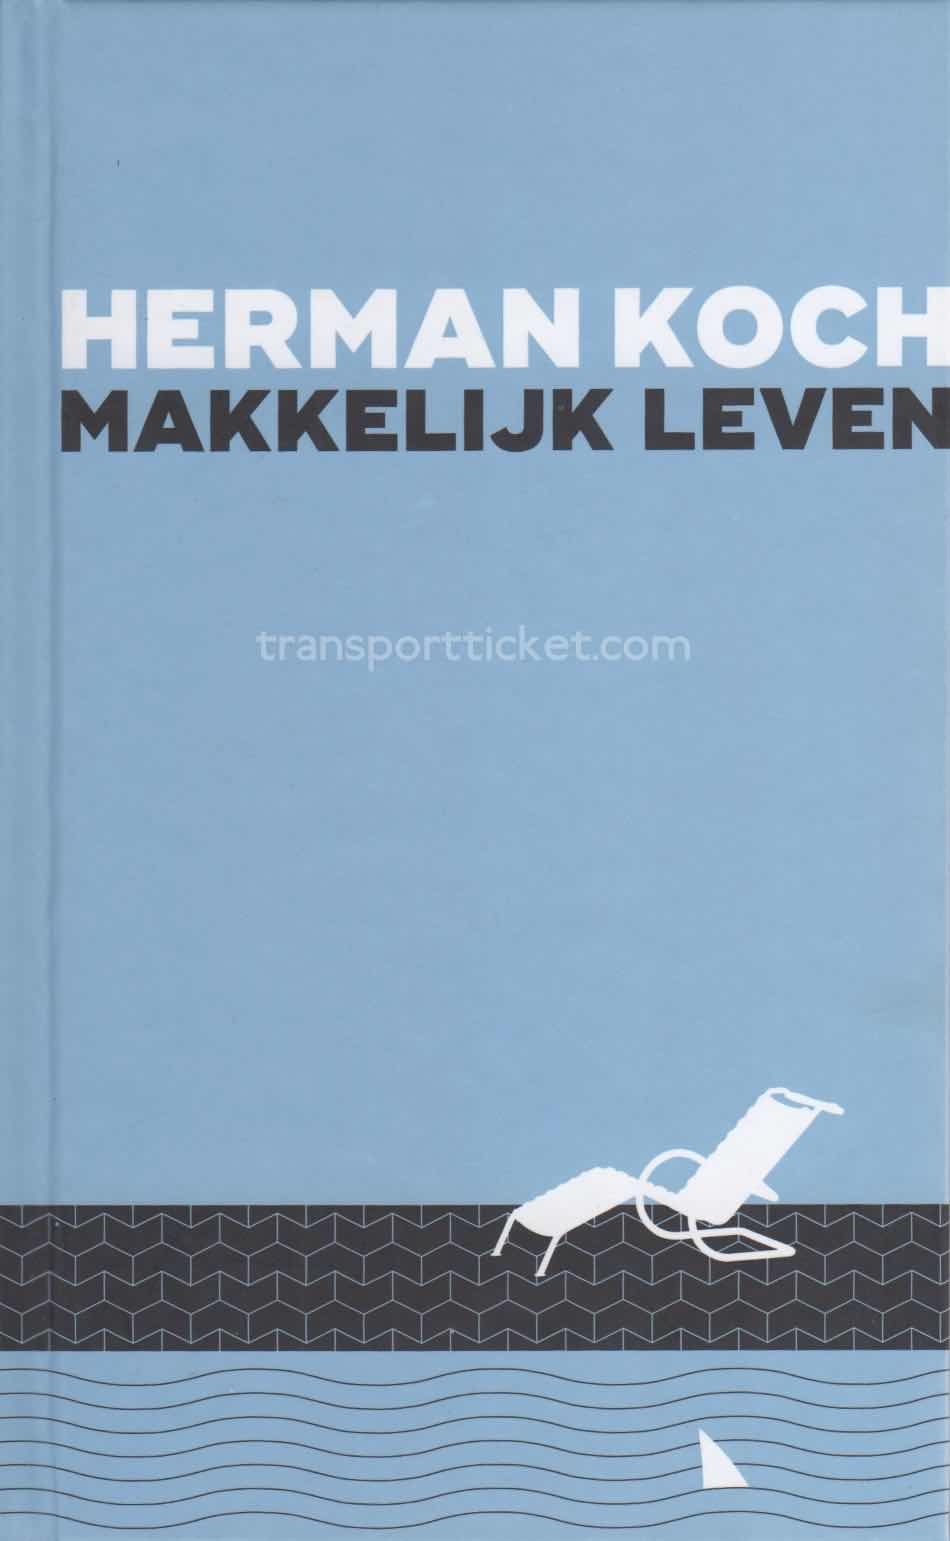 Herman Koch - Makkelijk leven (2017)